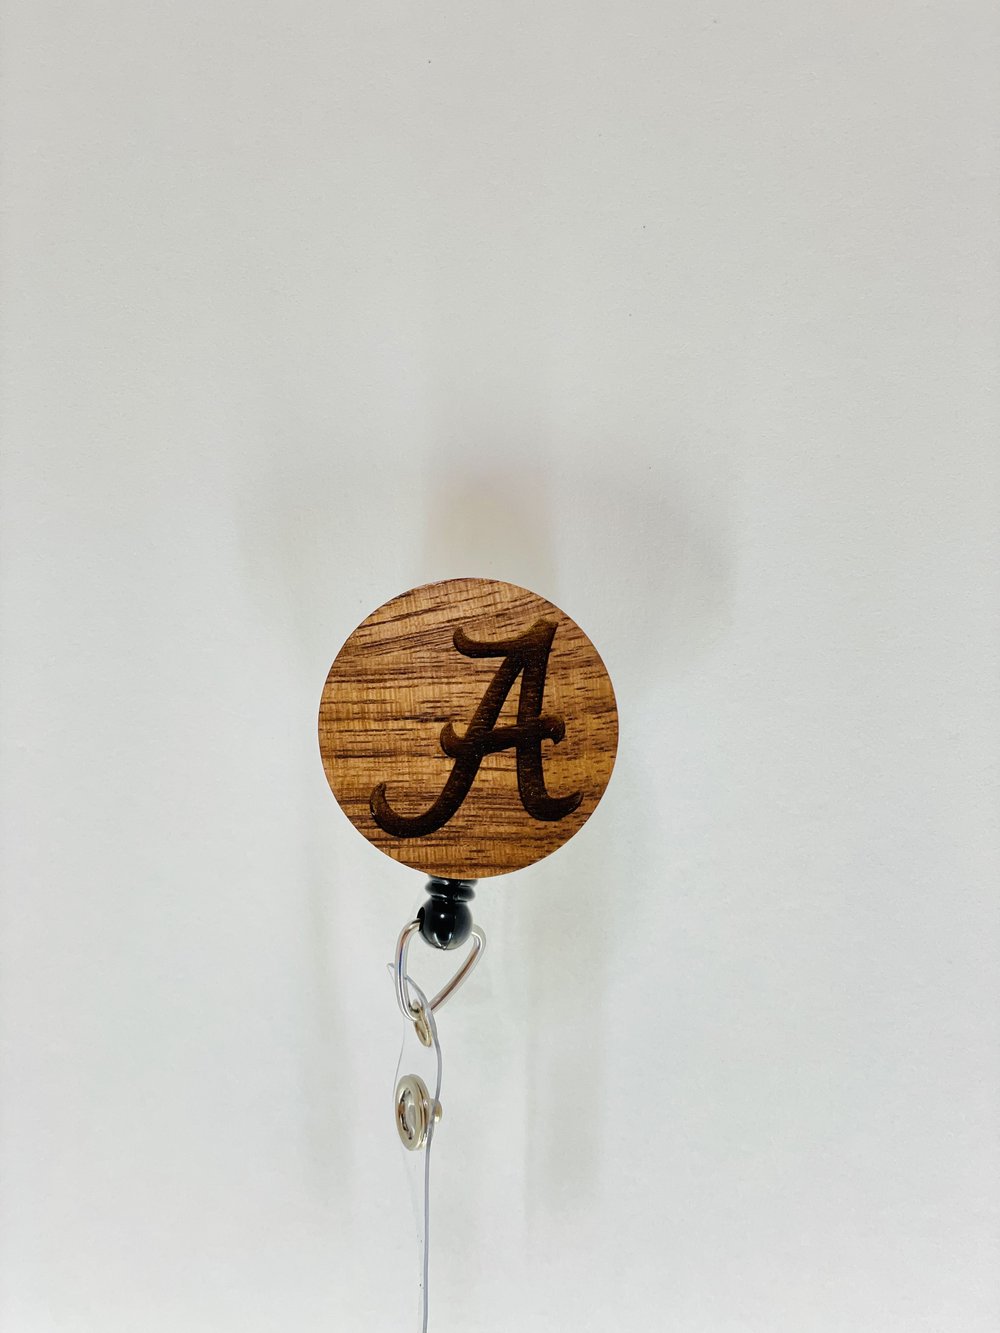 Gold Alabama Crimson Tide Personalized Key Ring